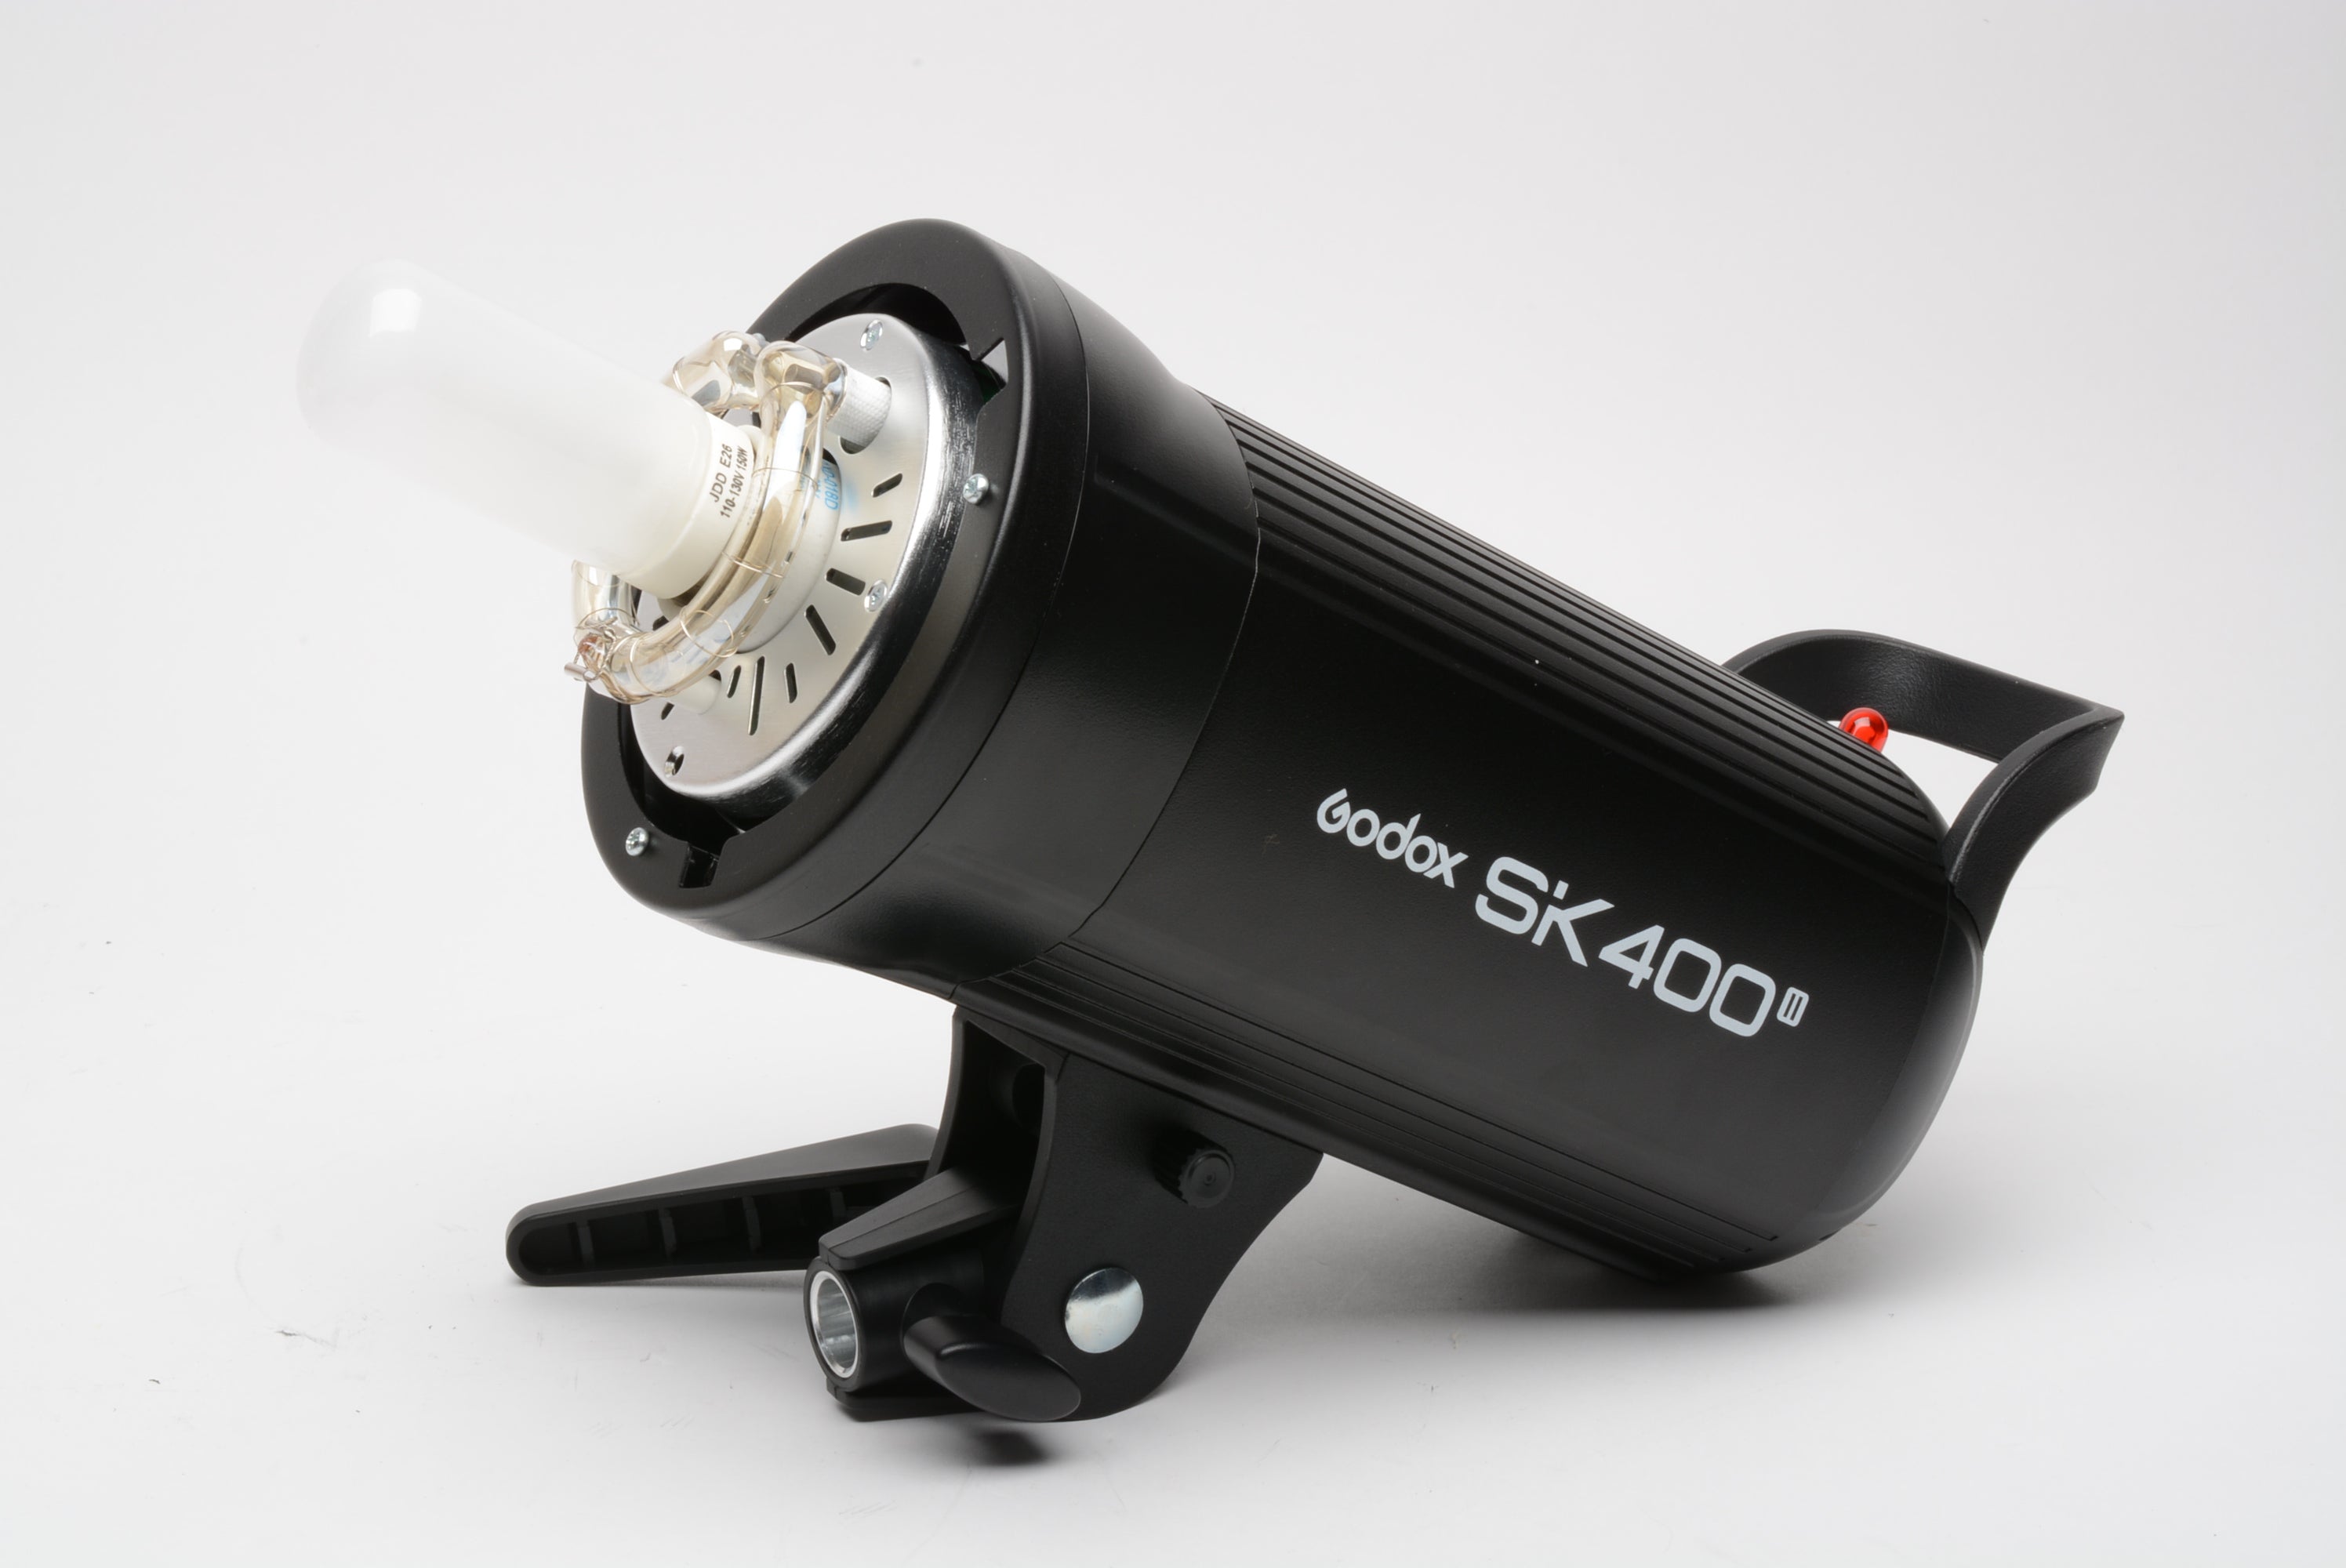 Godox SK400 II Pro studio flash, barely used, boxed, complete